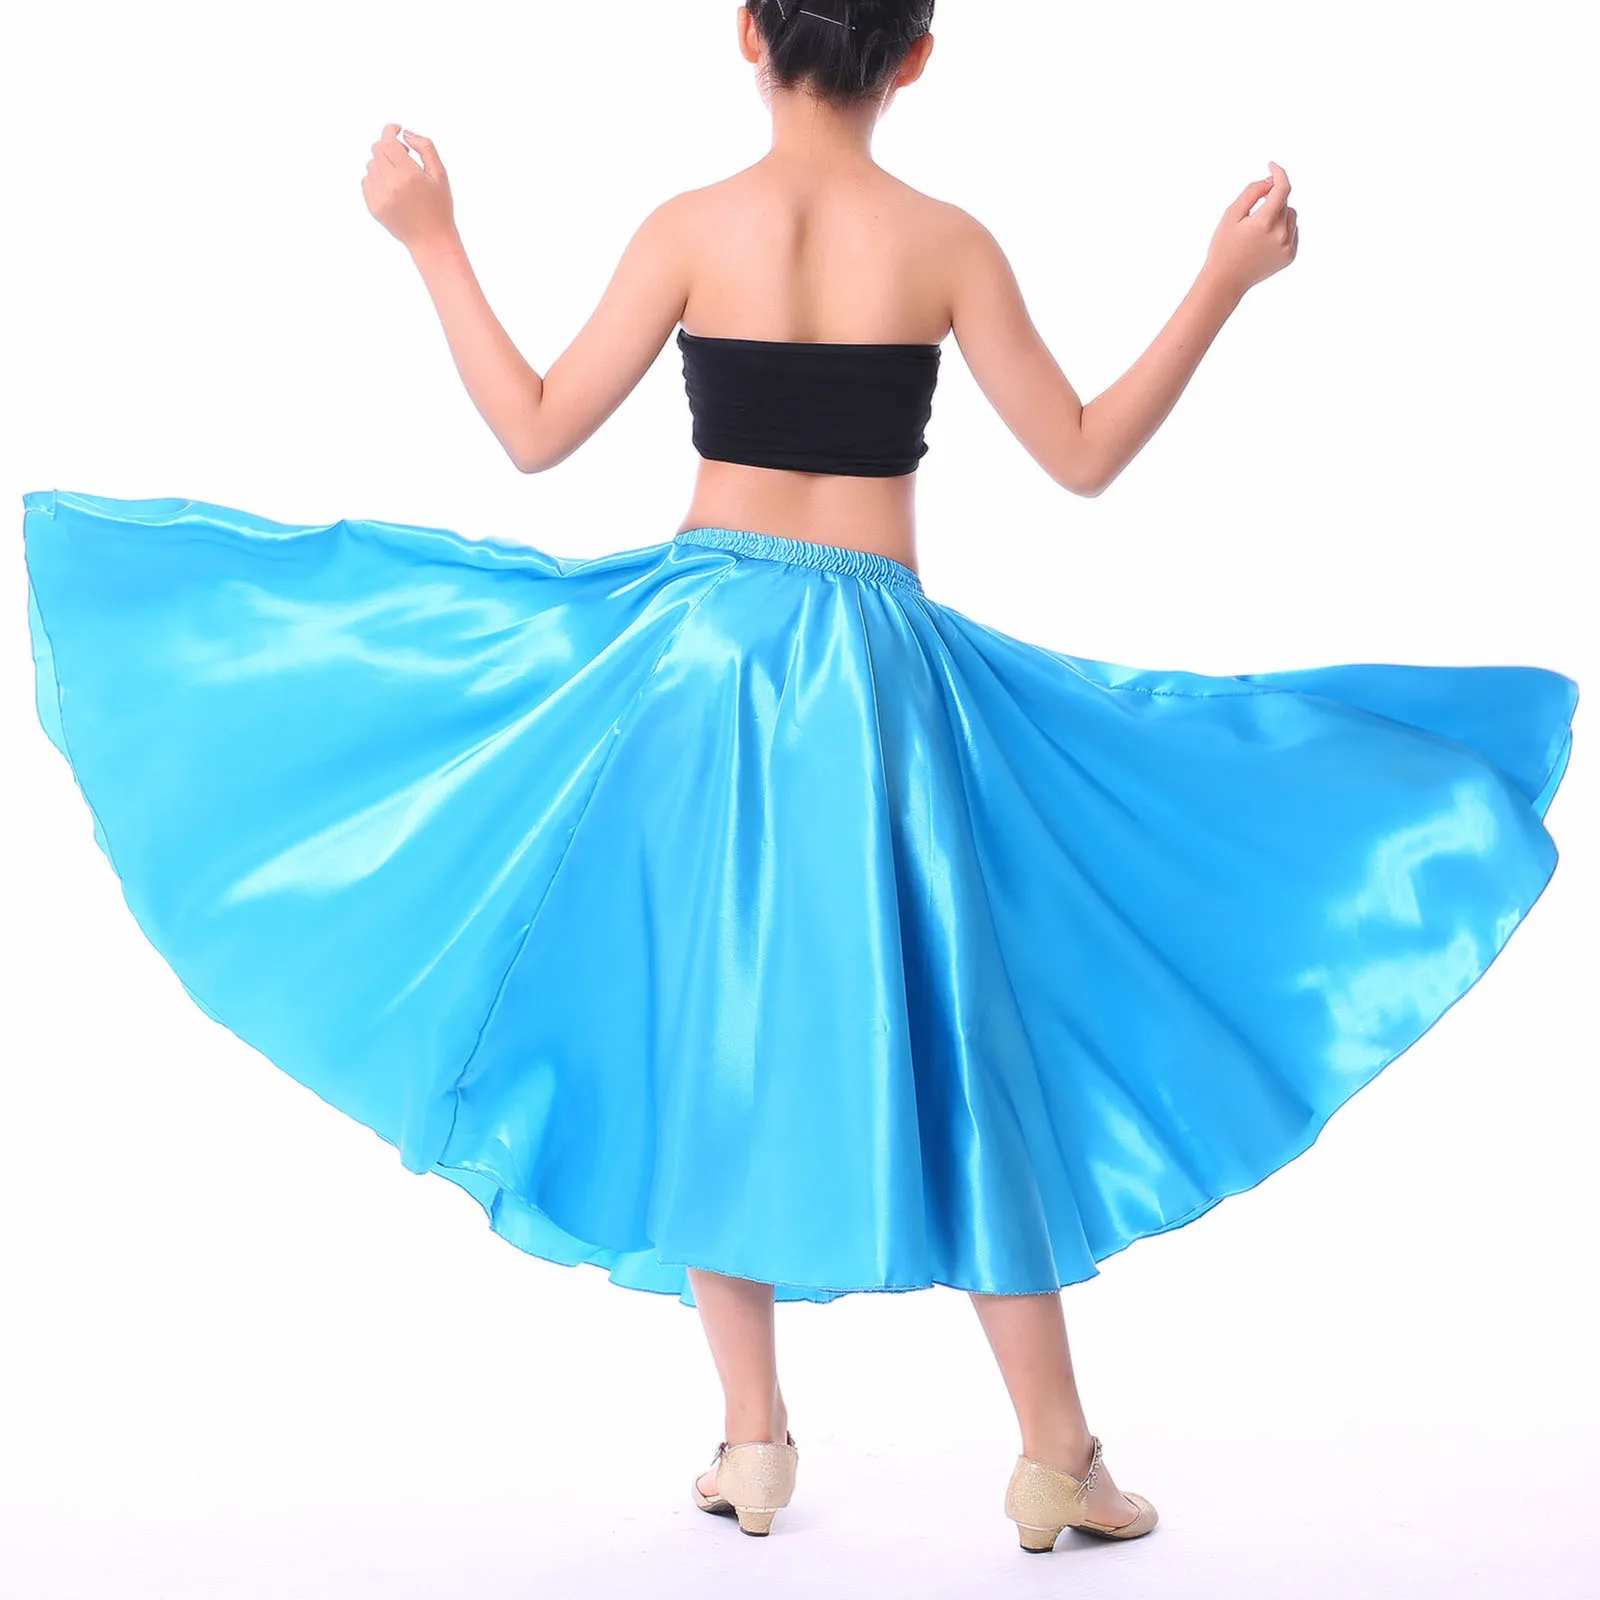 Как сшить испанскую юбку 🚩 испанские юбки 🚩 Рукоделие